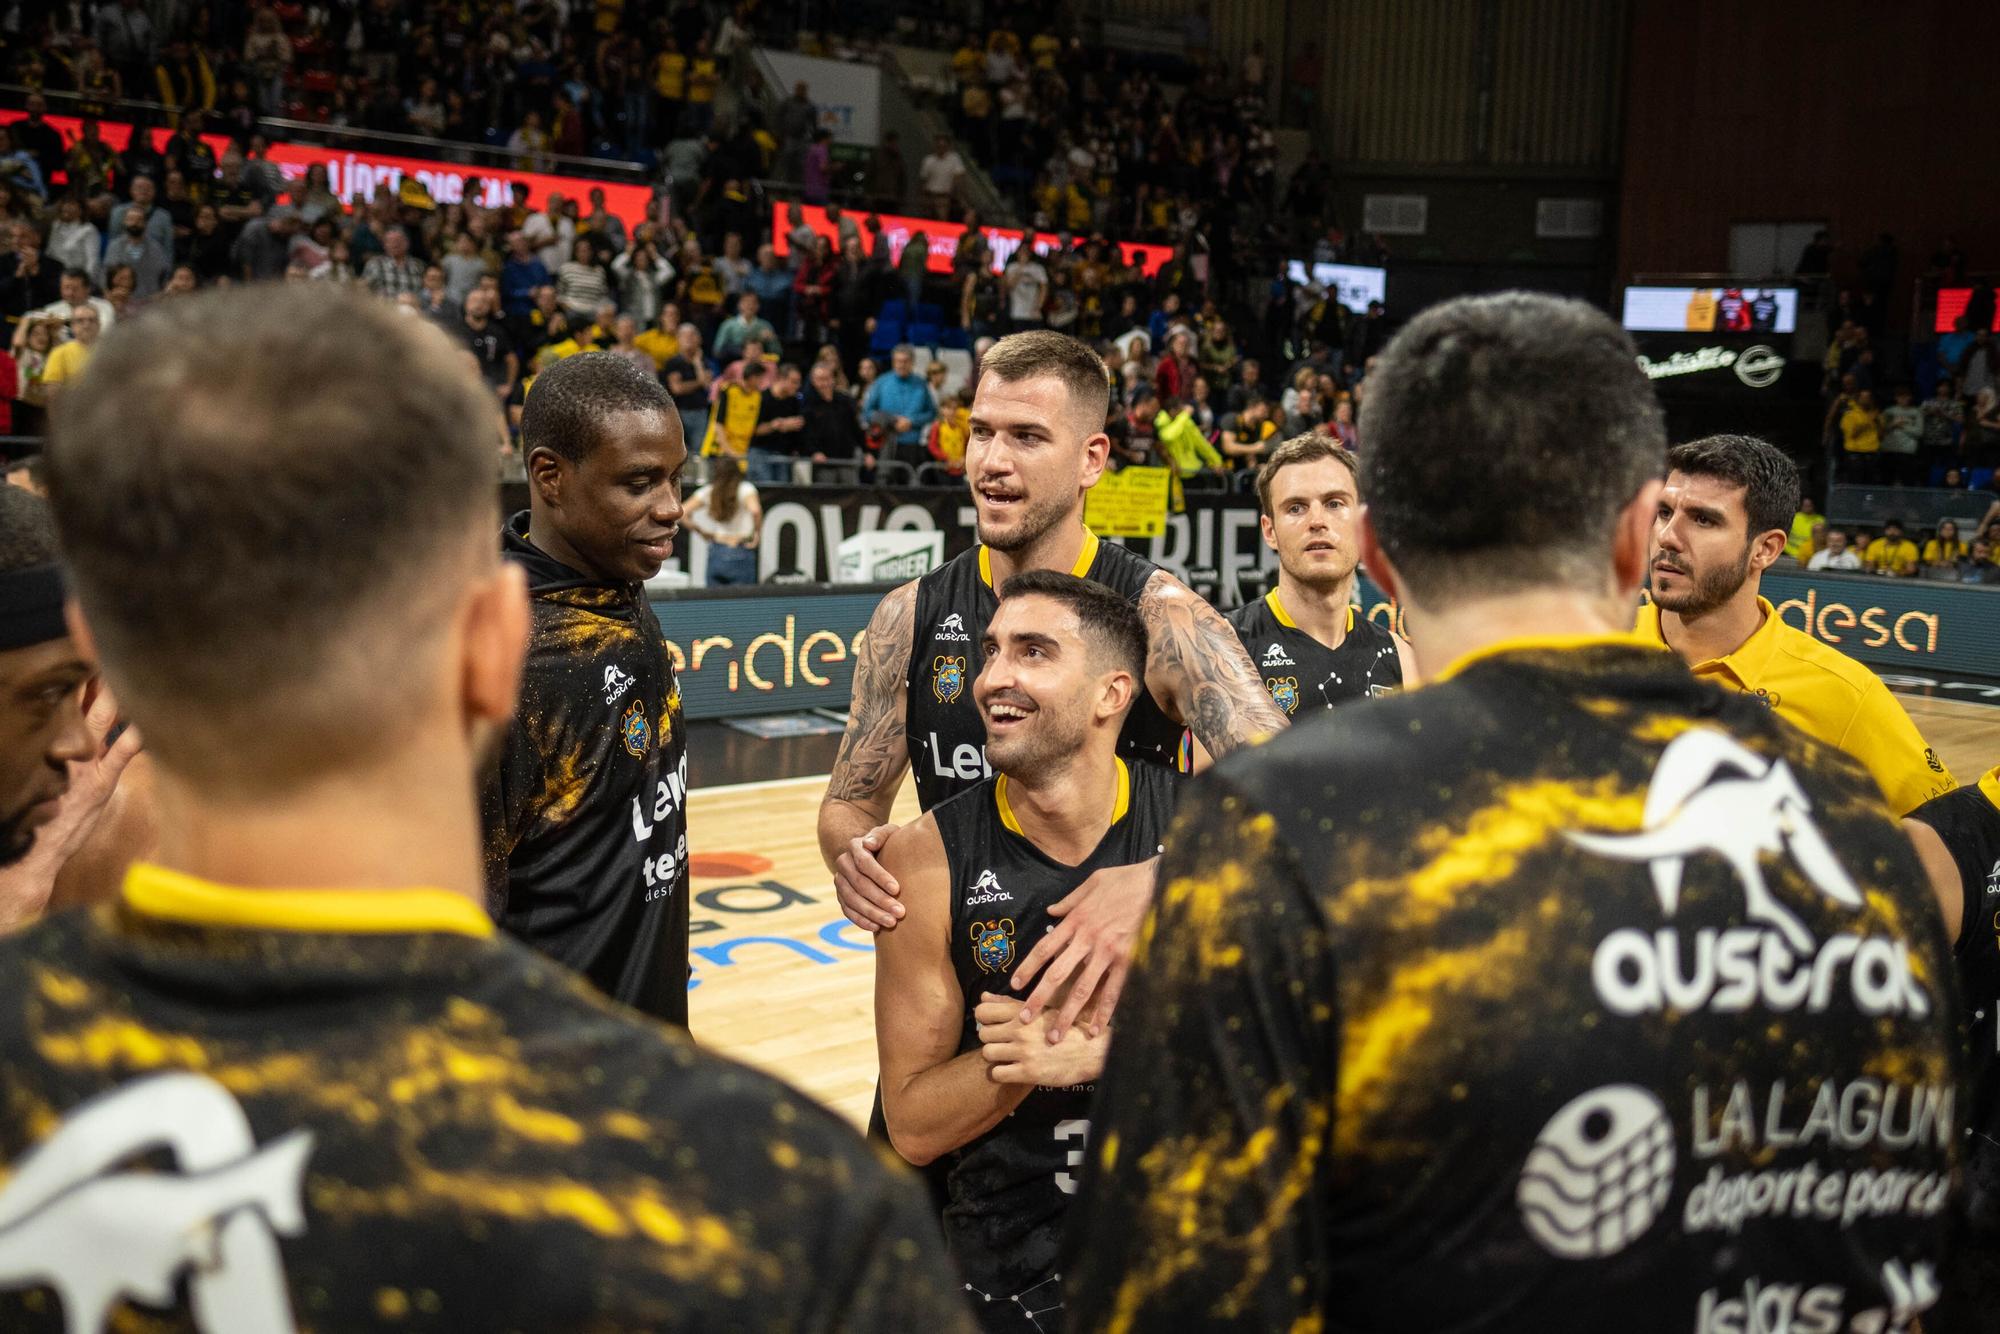 Liga Endesa: Lenovo Tenerife - Valencia Basket